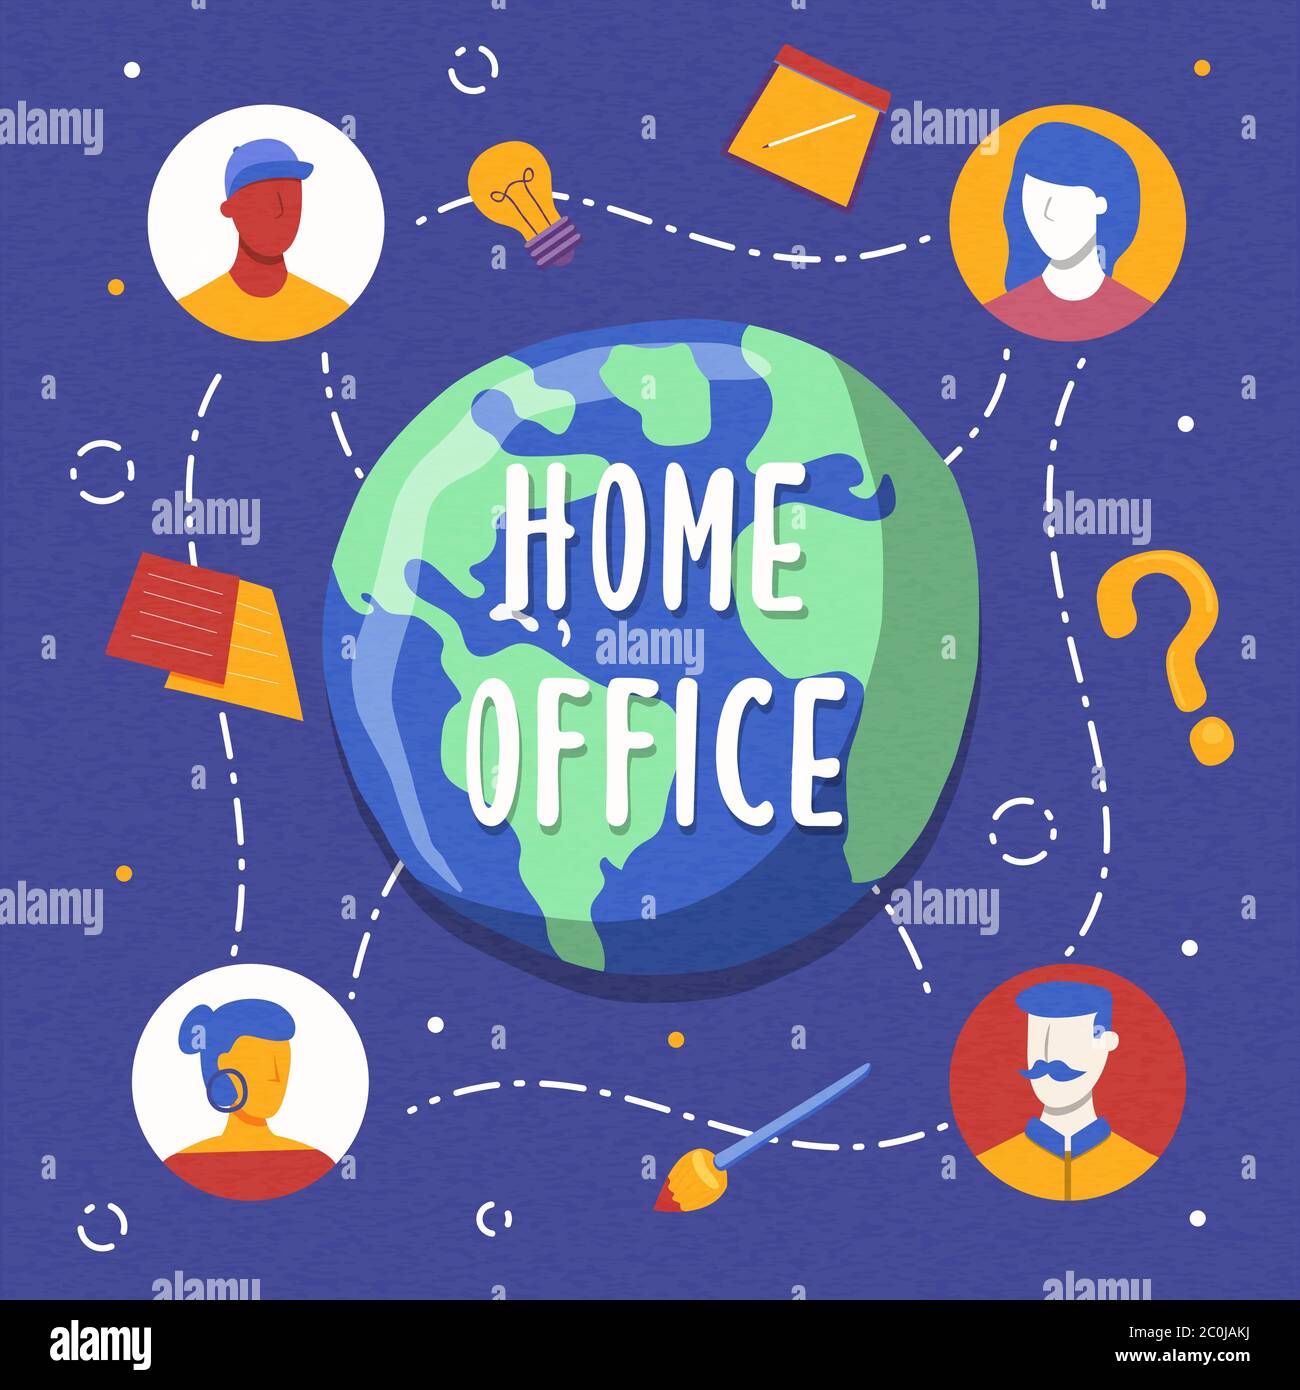 Home Office Illustration des globalen Arbeitsteams online verbunden für Business Meeting, kreative Brainstorming oder Job-Kommunikation Konzept. Stock Vektor